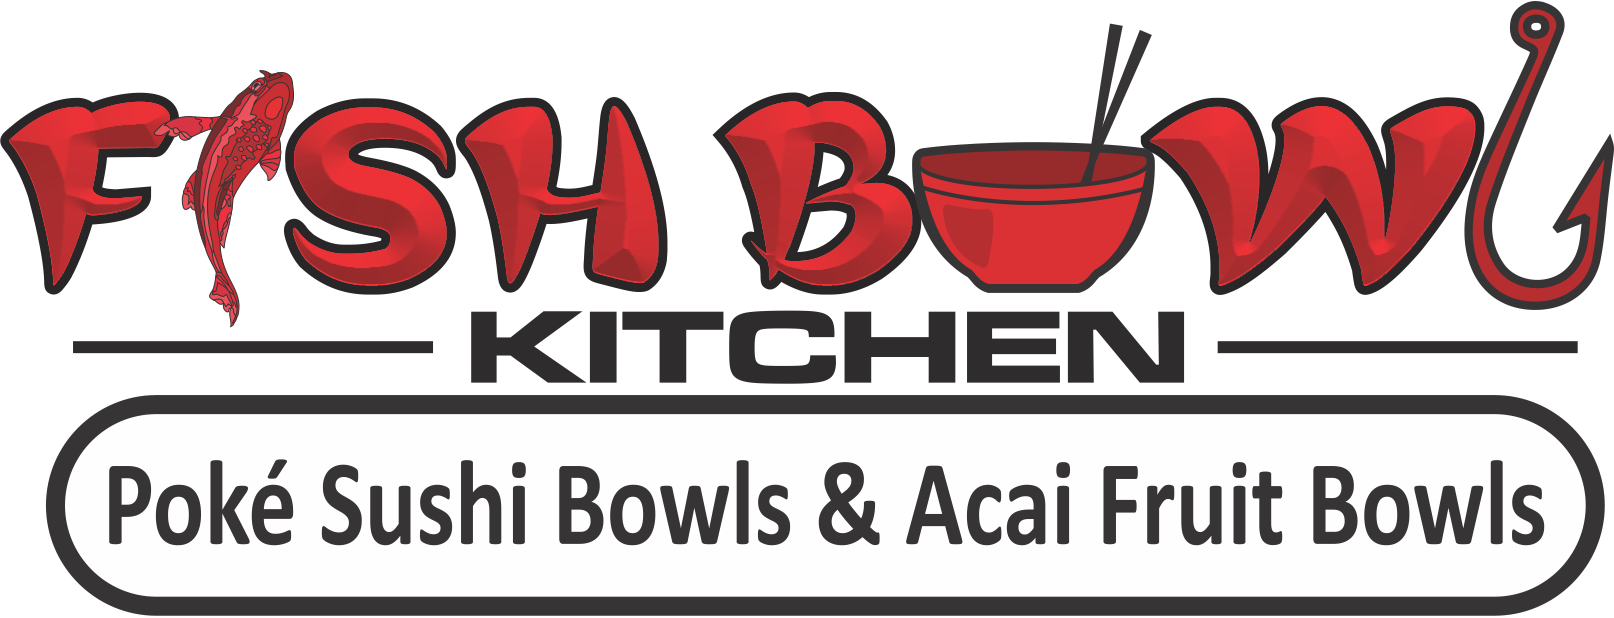 Fish Bowl Kitchen